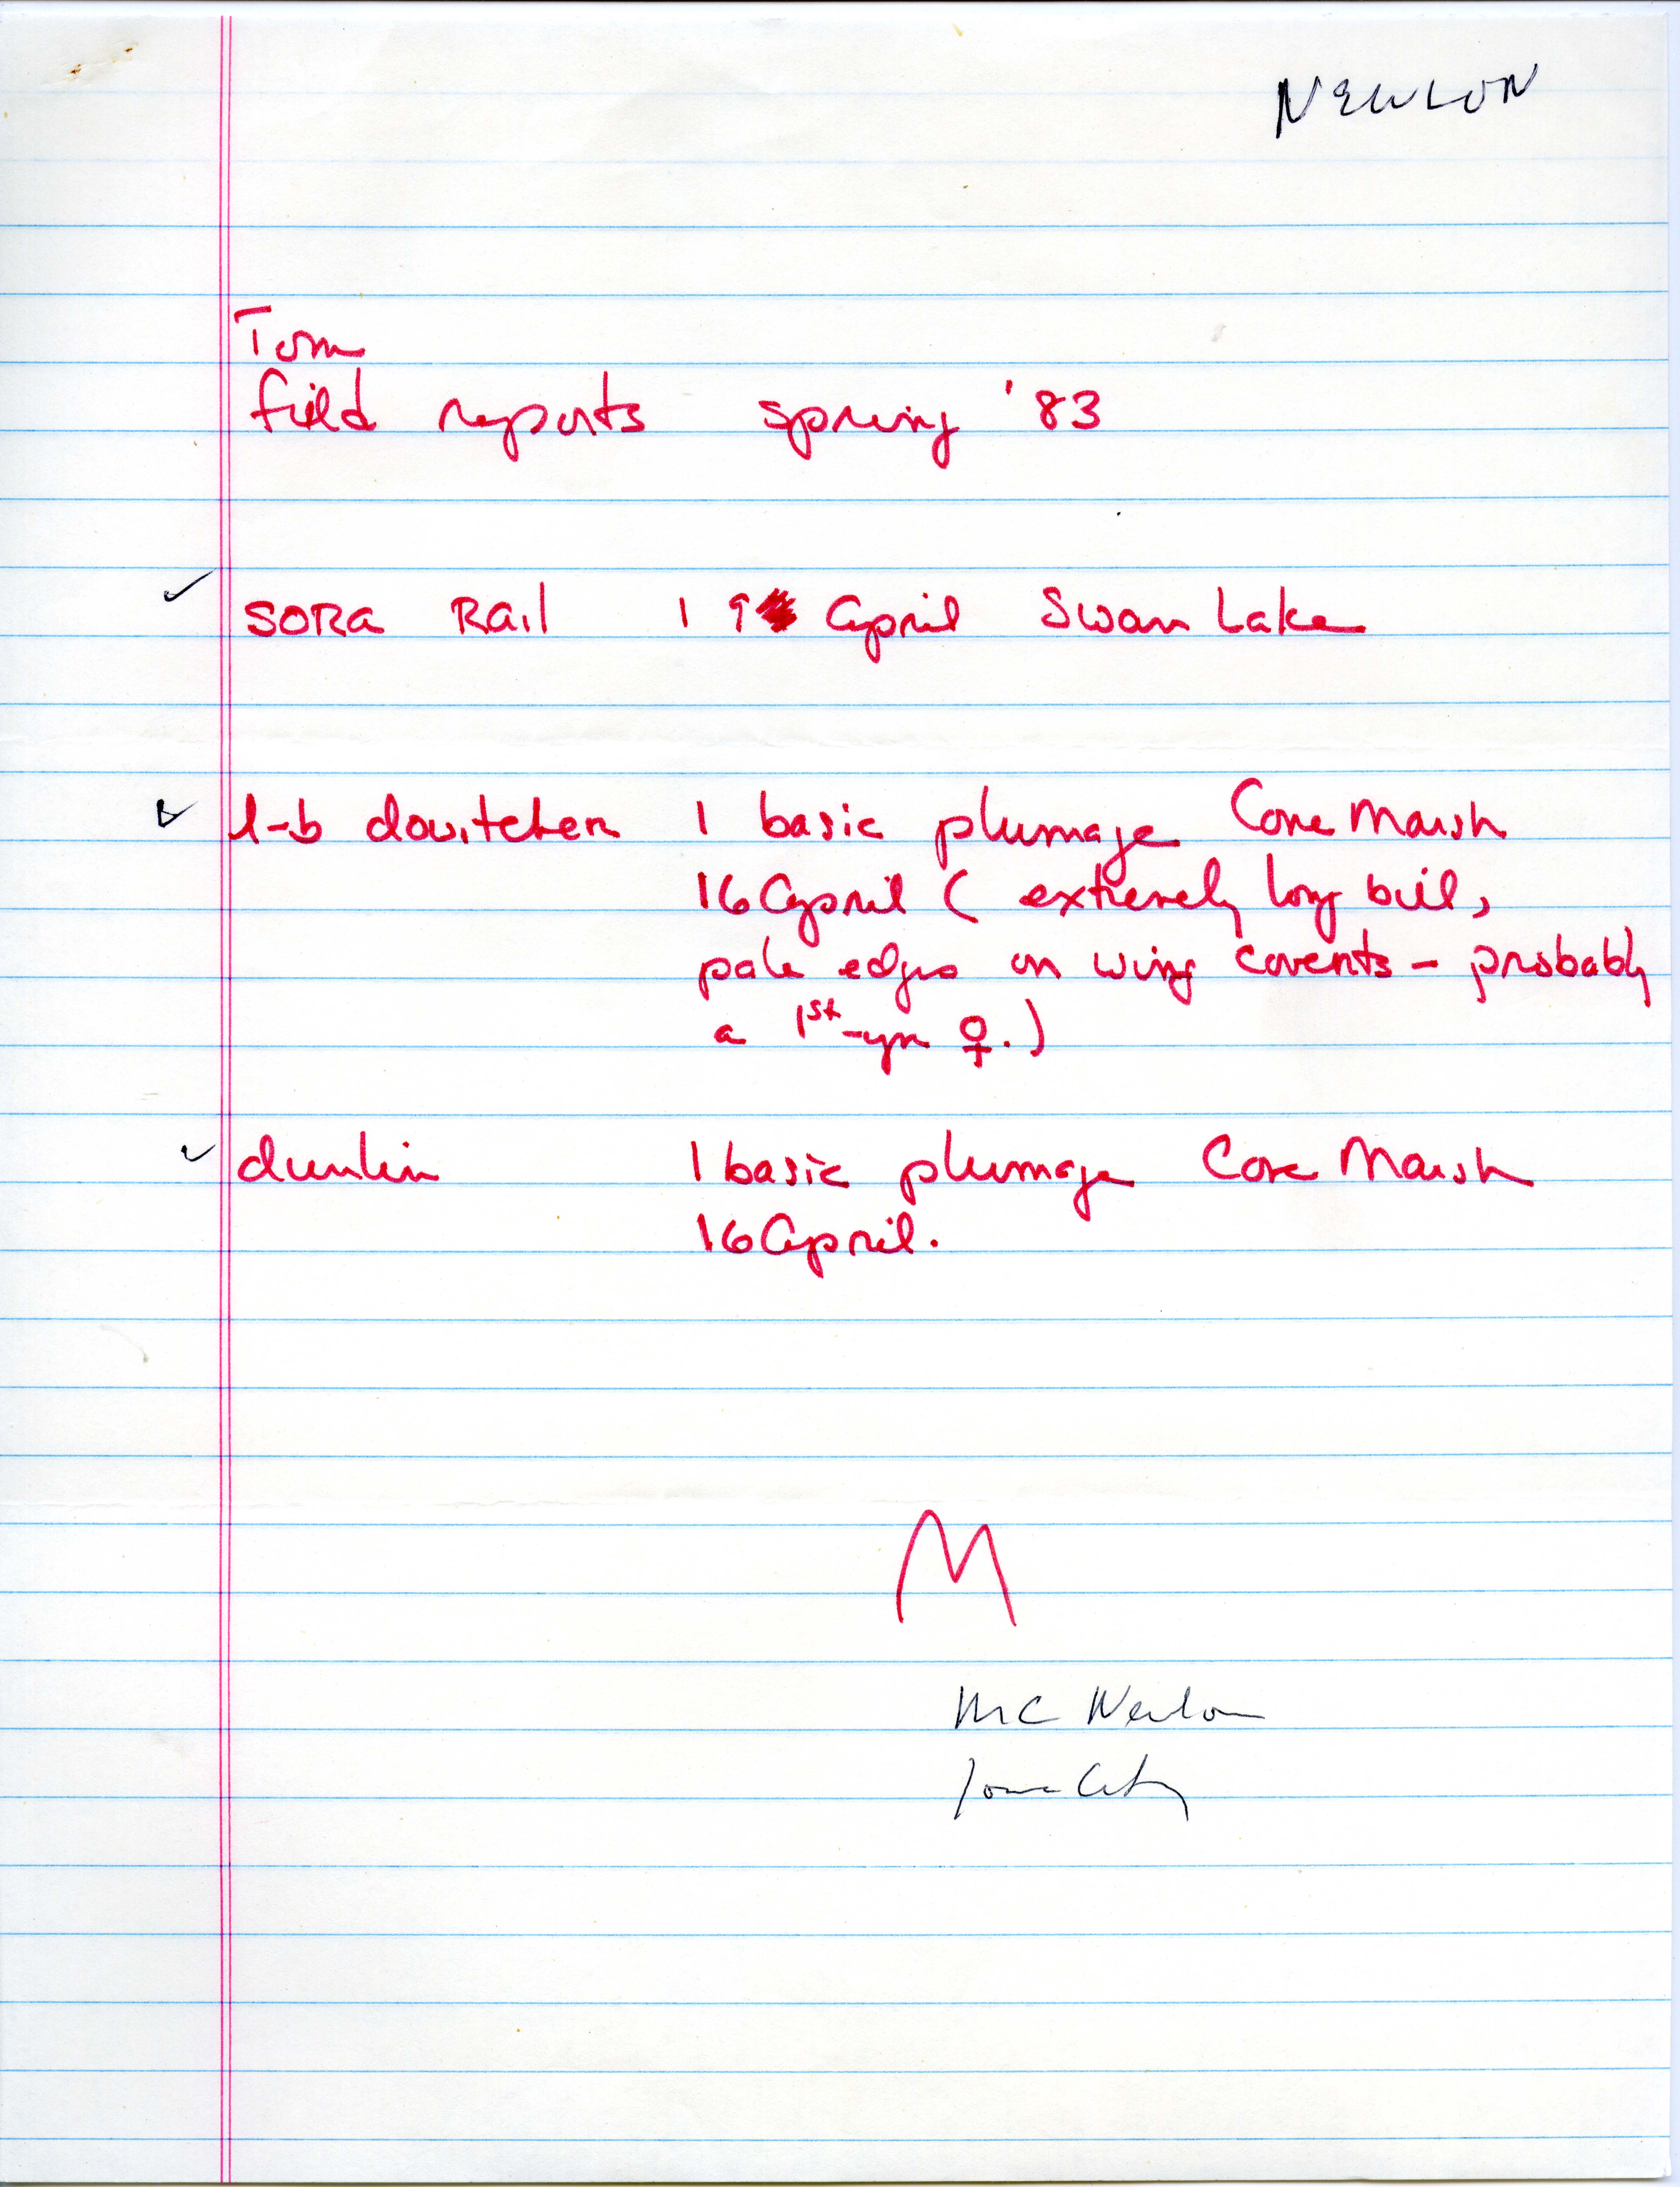 Michael C. Newlon letter to Thomas H. Kent regarding spring bird sightings, spring 1983